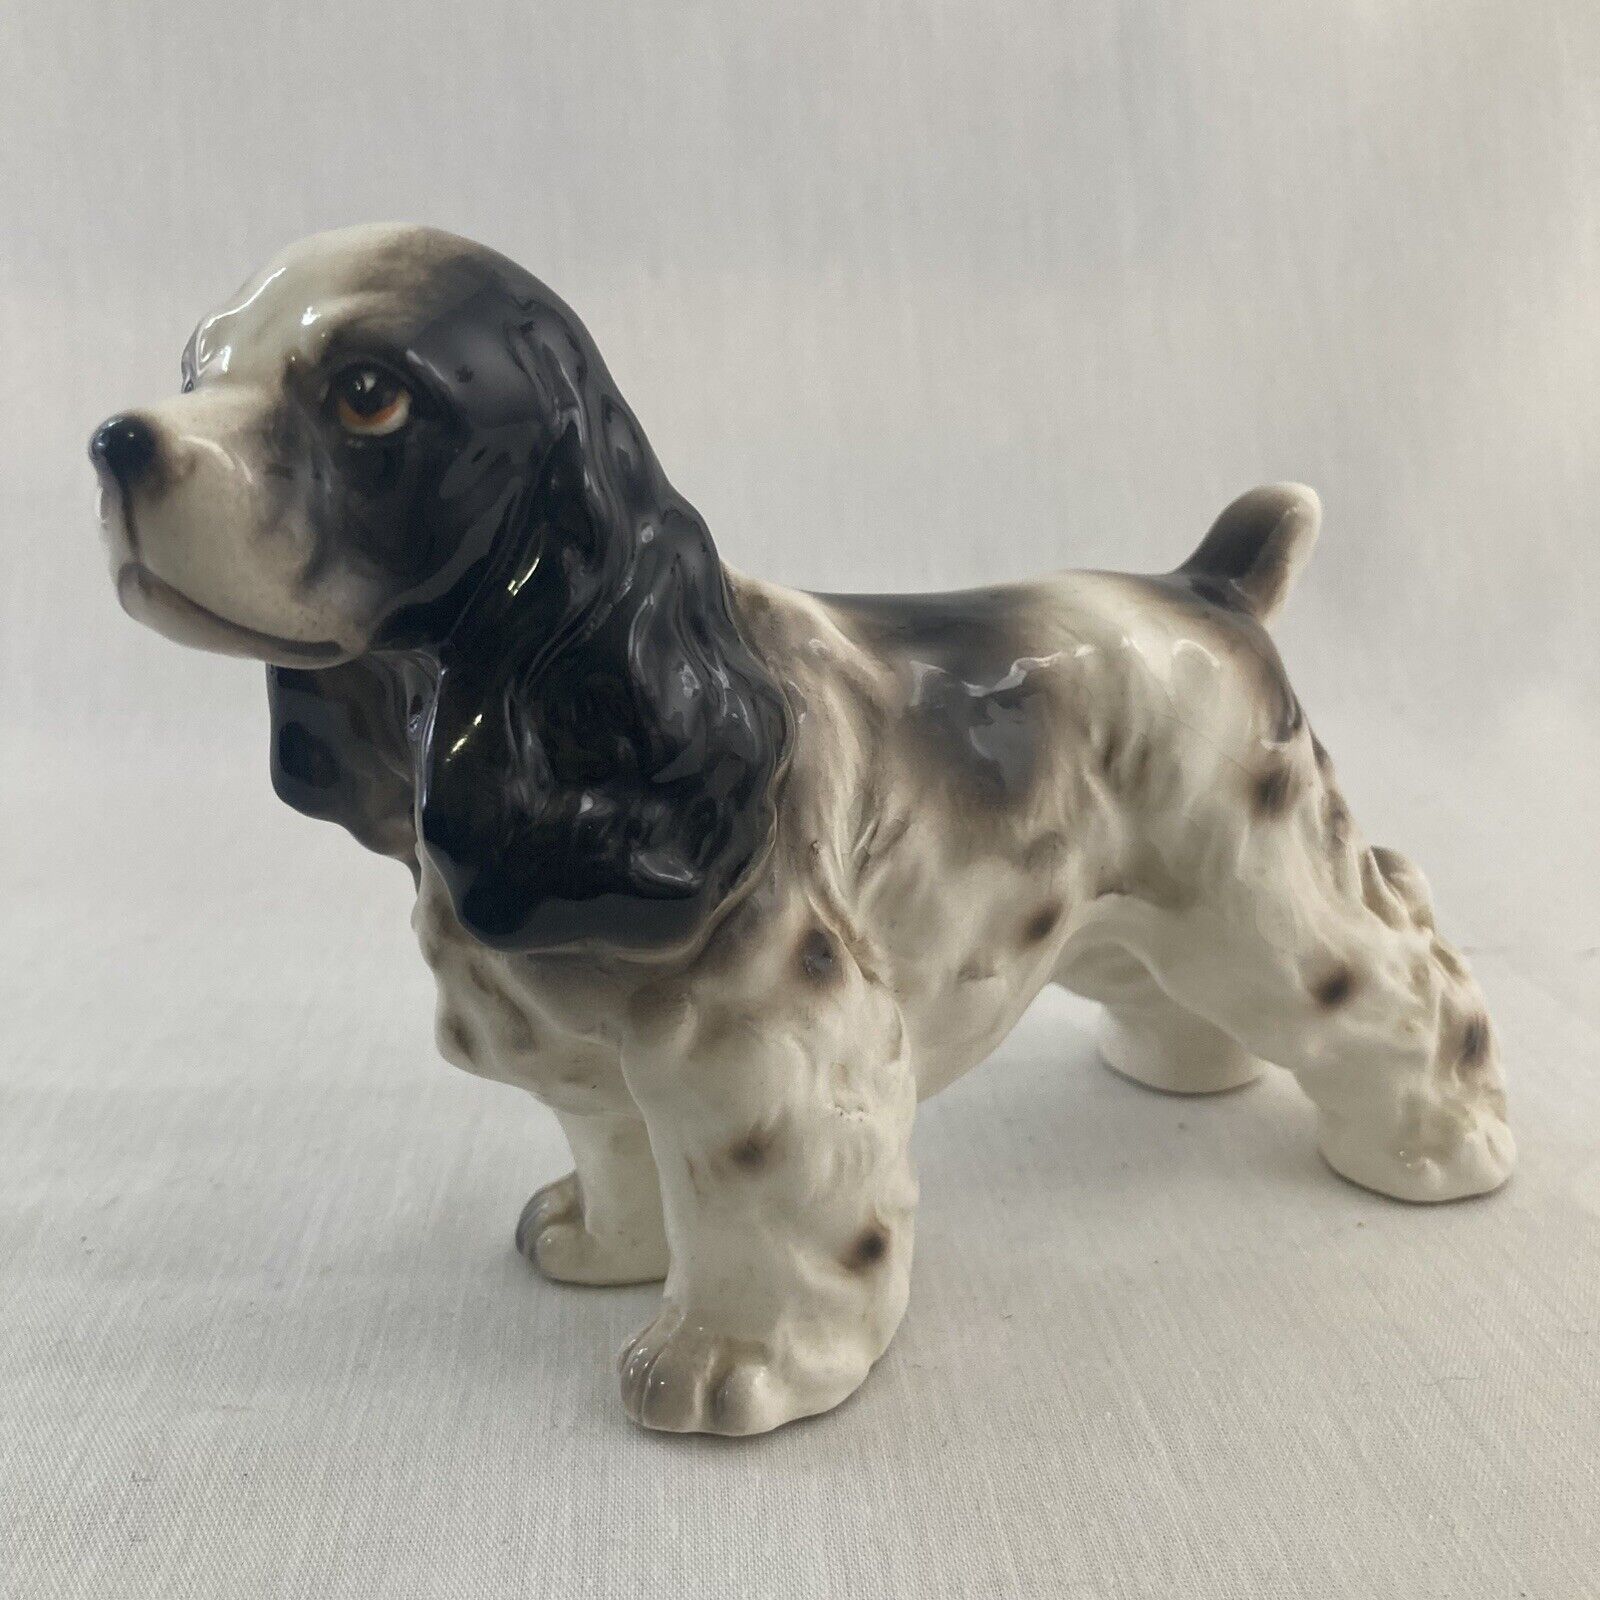 VINTAGE Ceramic Black & White Cocker Spaniel Dog Figurine